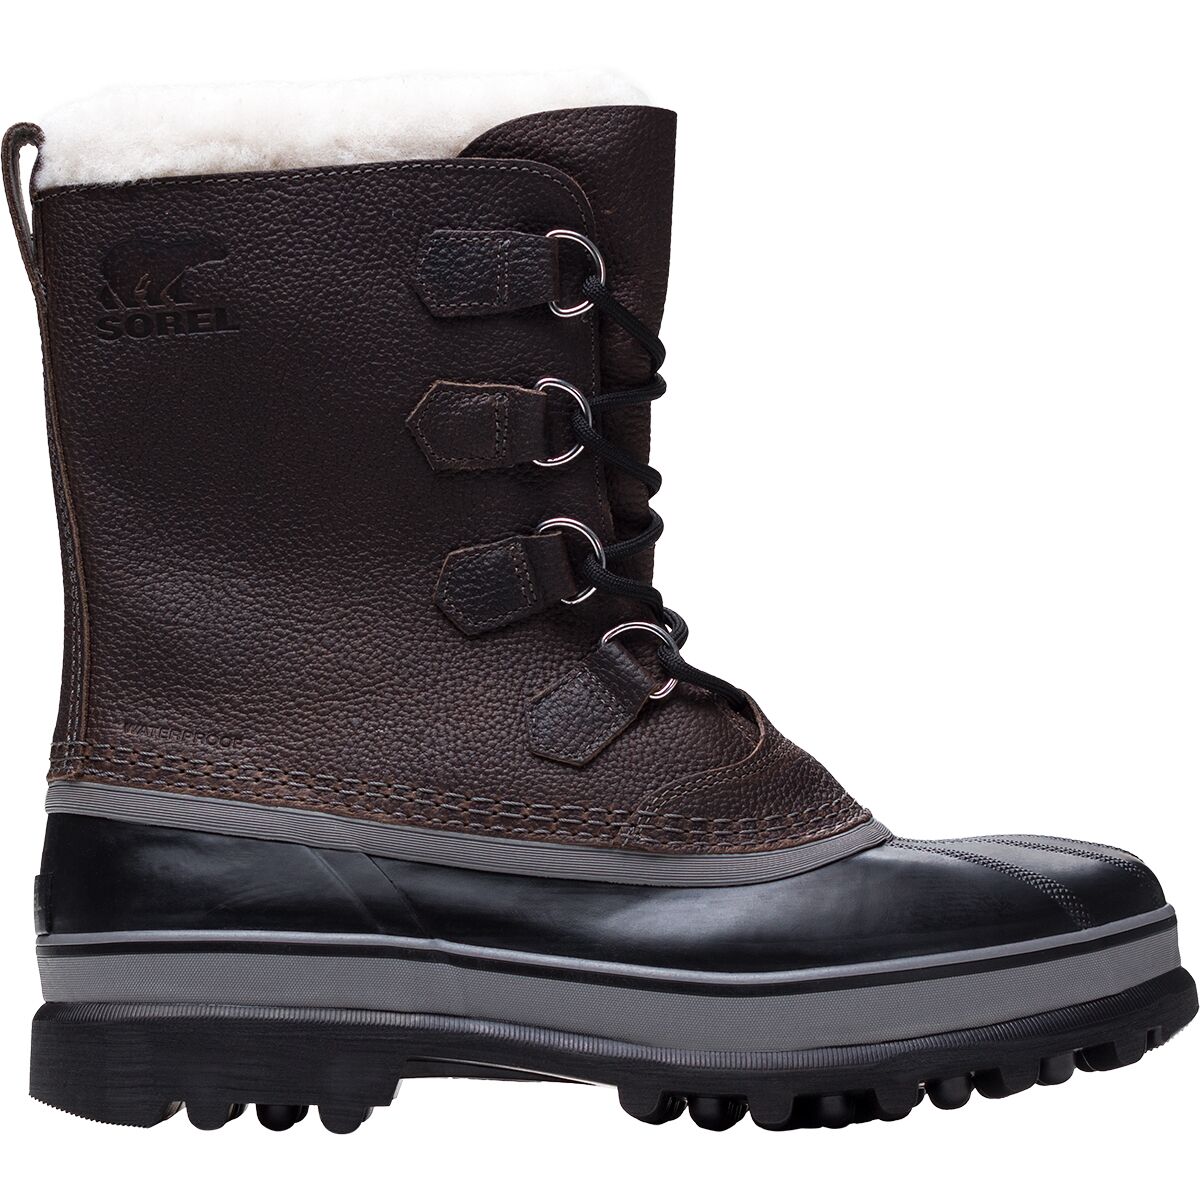 Sorel Caribou Wool Boot - Men's 